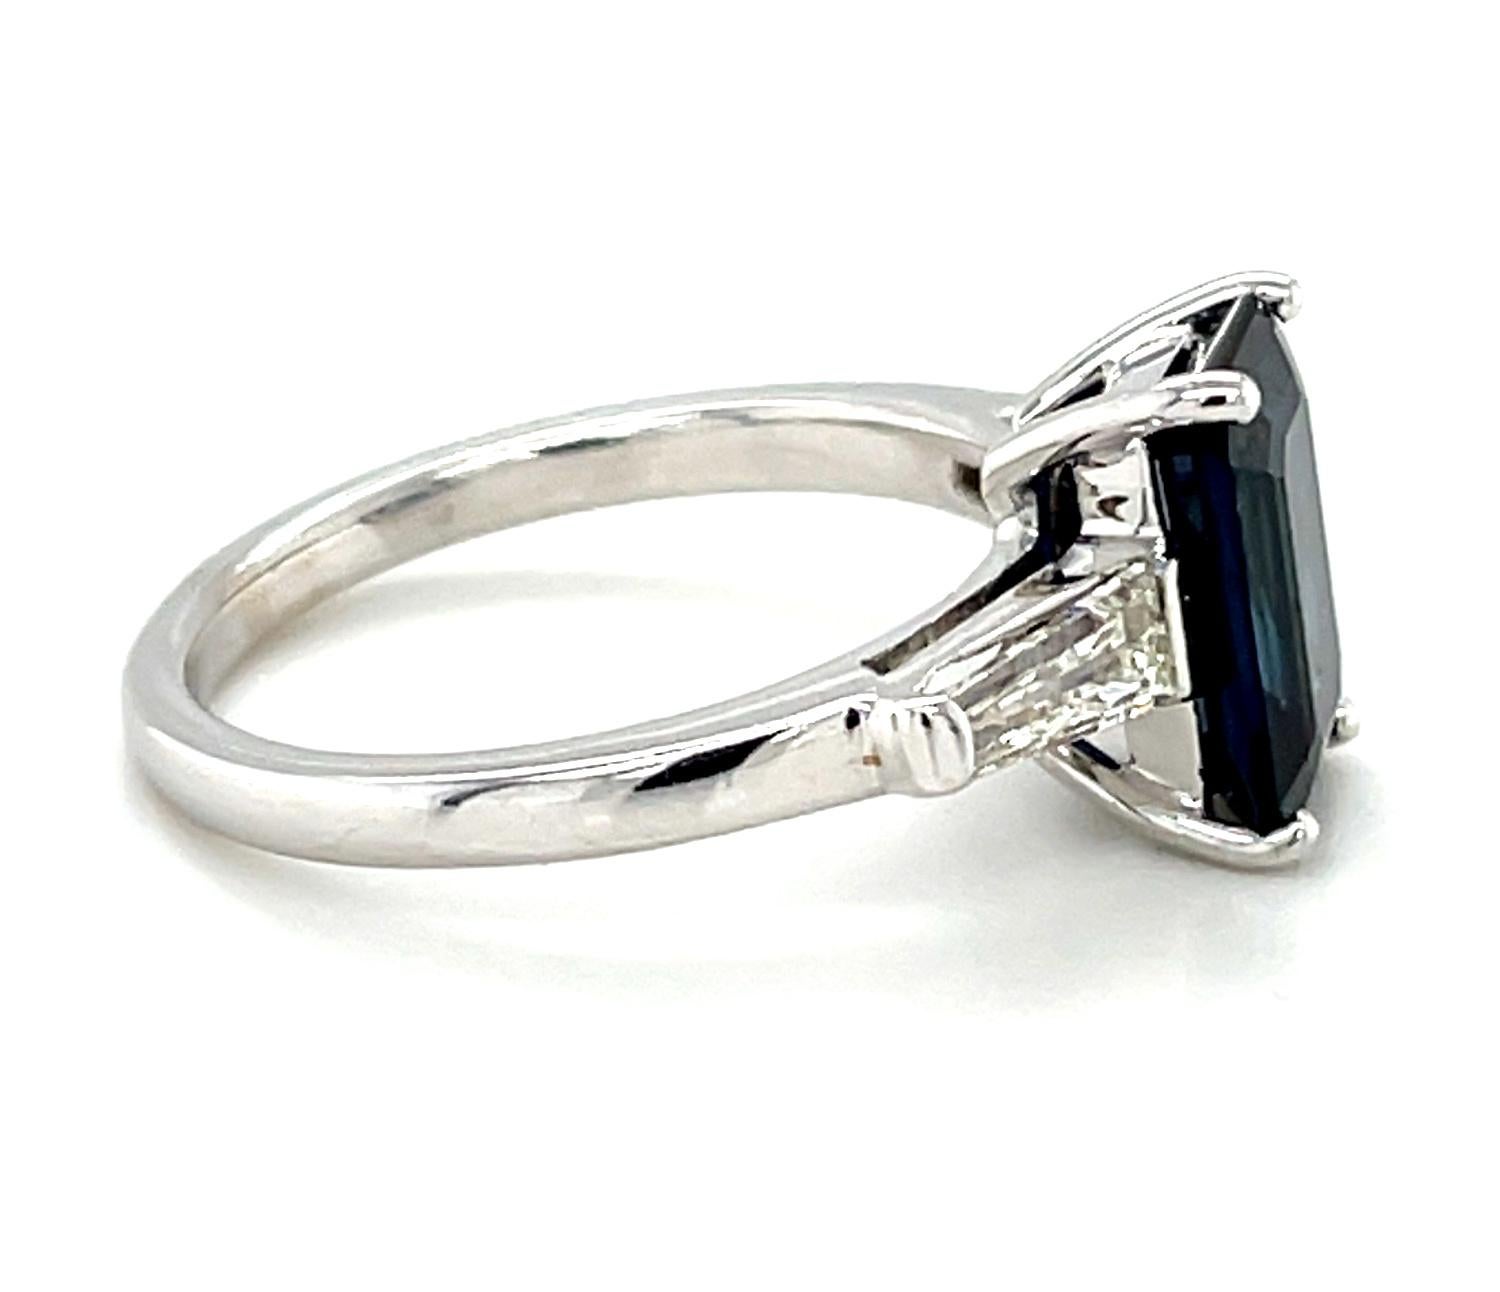 emerald cut sapphire ring with baguette diamonds